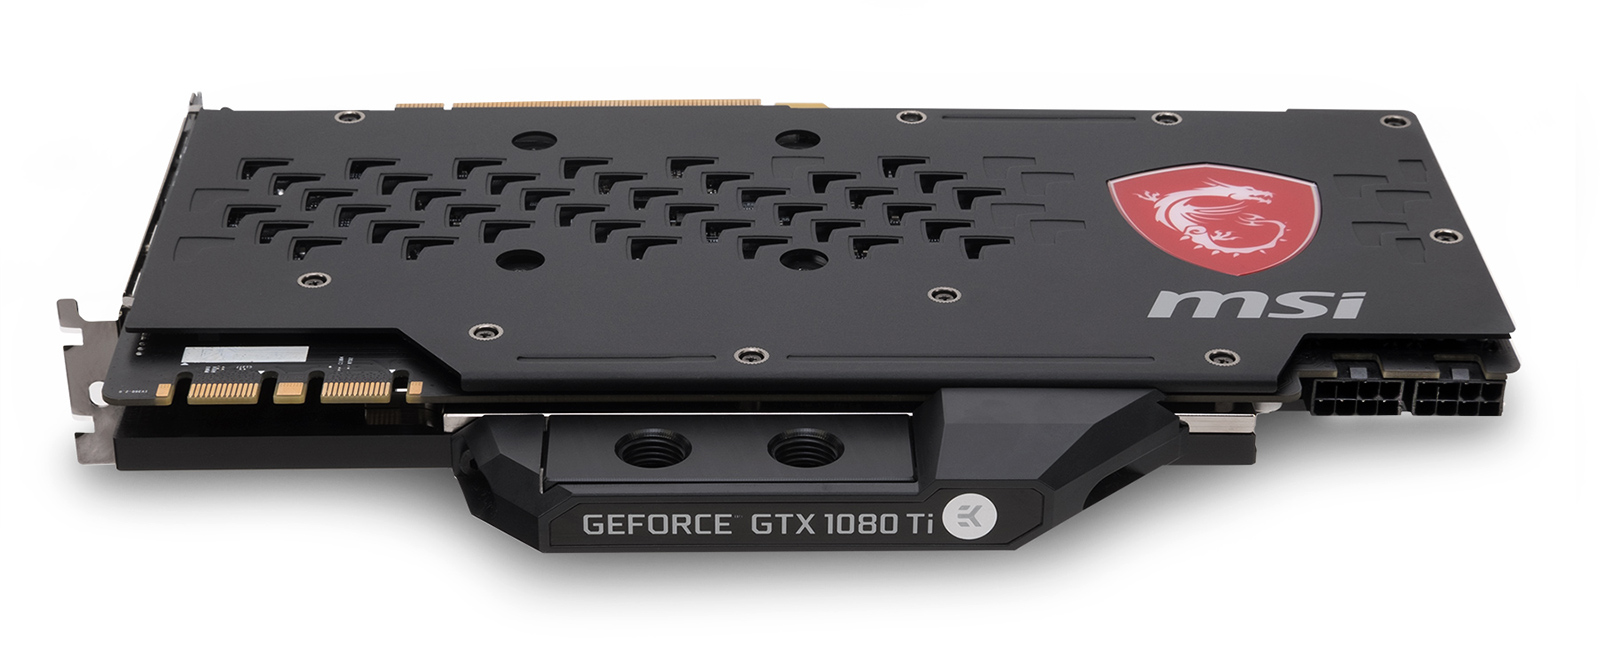 EK releases water block for MSI® GeForce® GTX 1080 Ti graphics